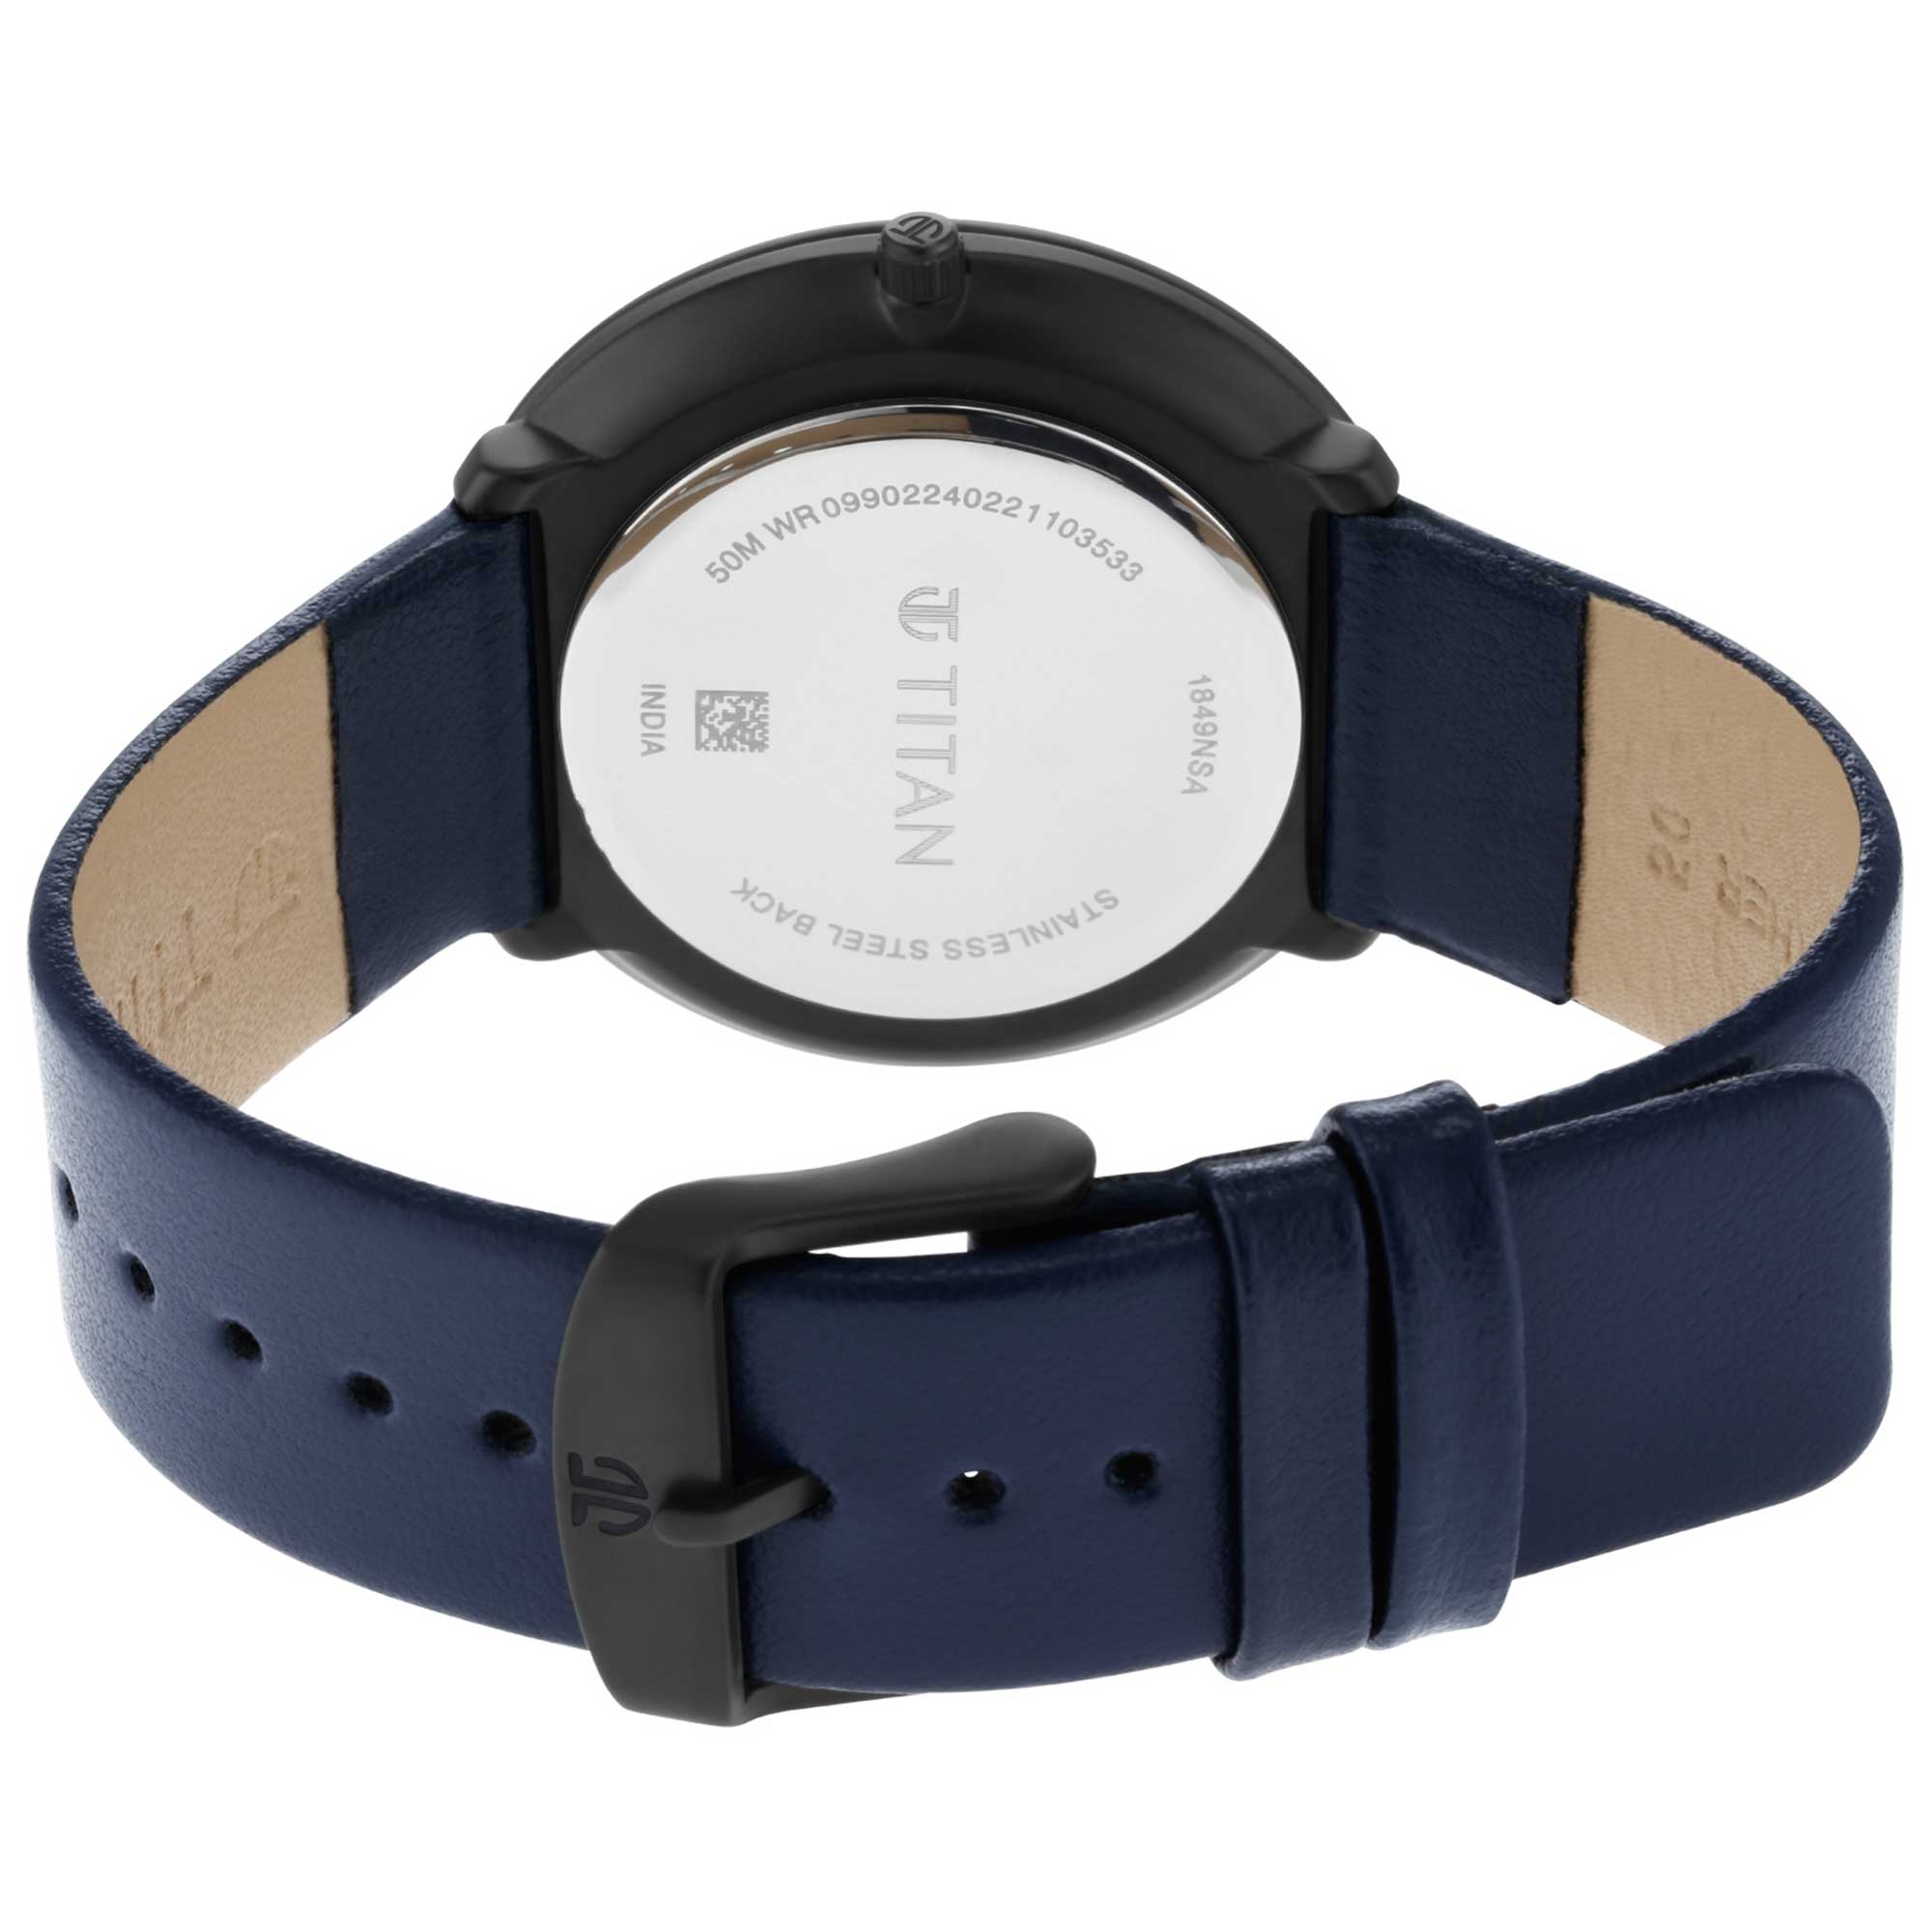 Titan Minimals White Dial Analog Leather Strap watch for Men